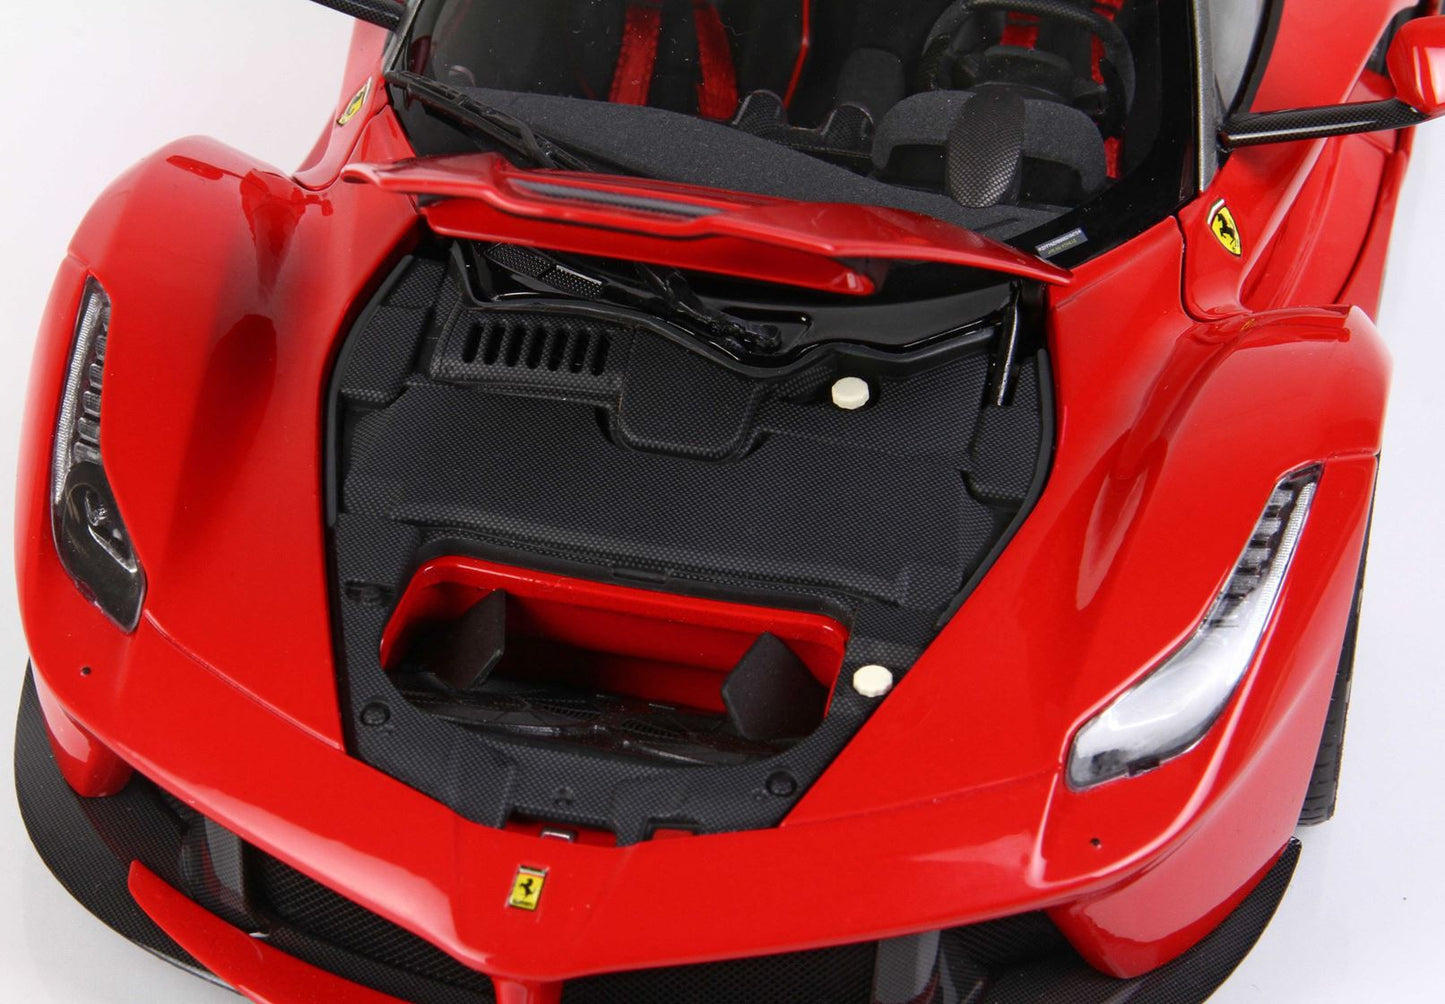 BBR 1/18 Ferrari LaFerrari DIE CAST Red Corsa 322 - grey roof- 70pcs limited